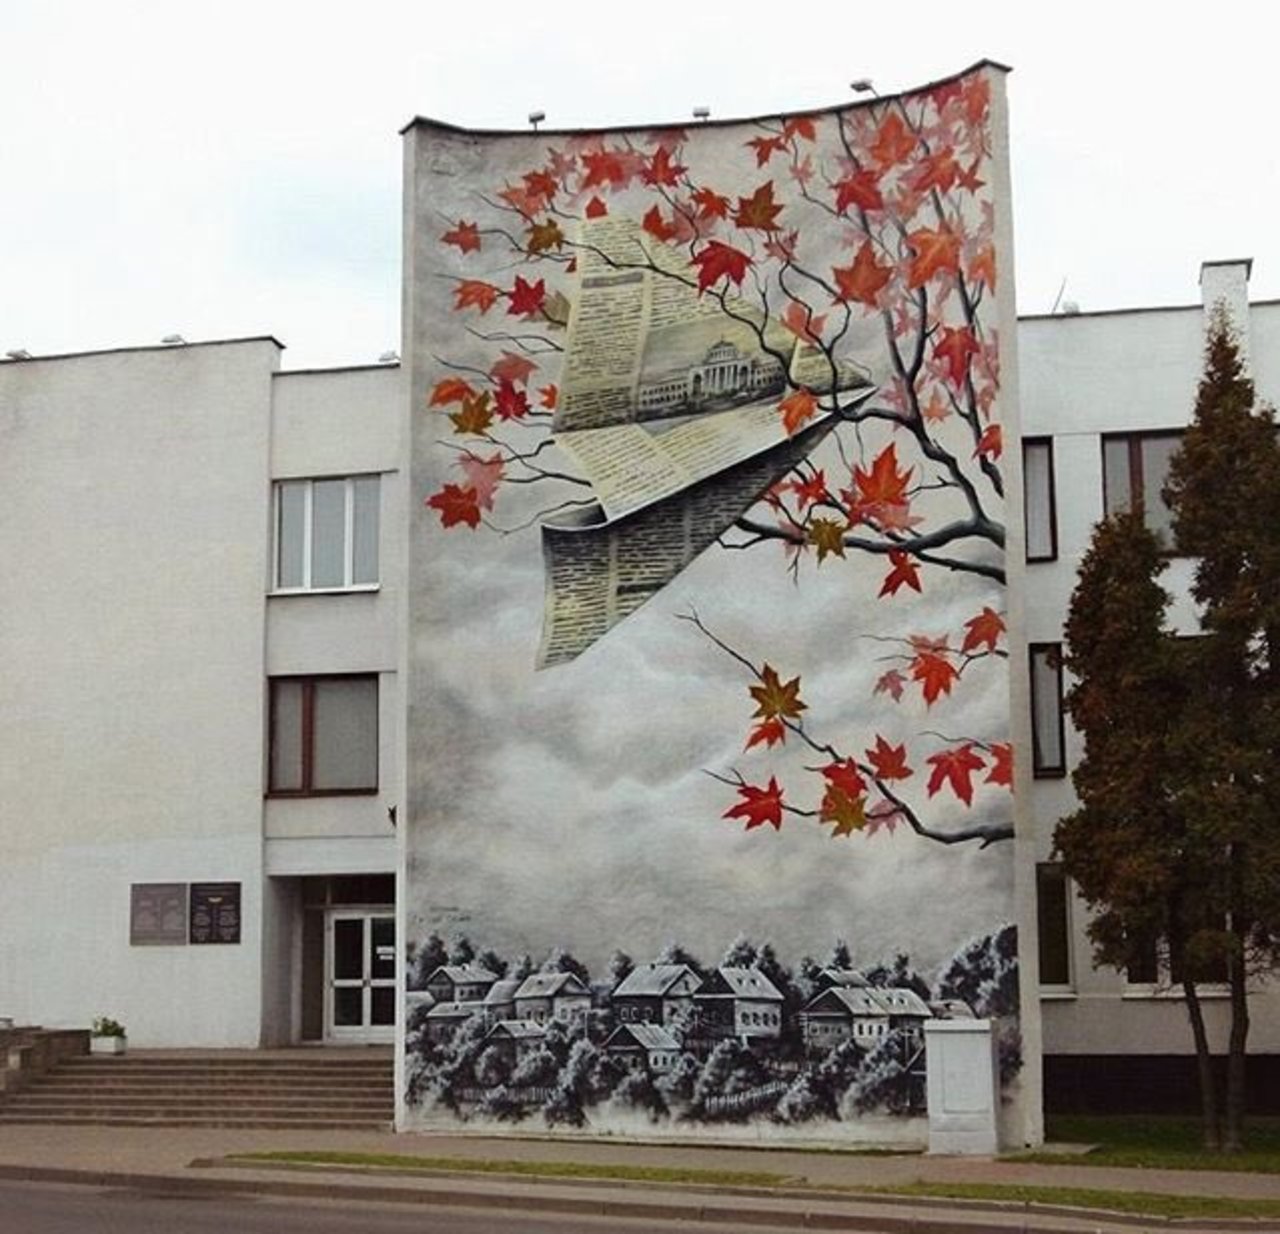 New Street Art by MUTUS in Belarus 

#art #graffiti #mural #streetart https://t.co/pku4xqCuX0